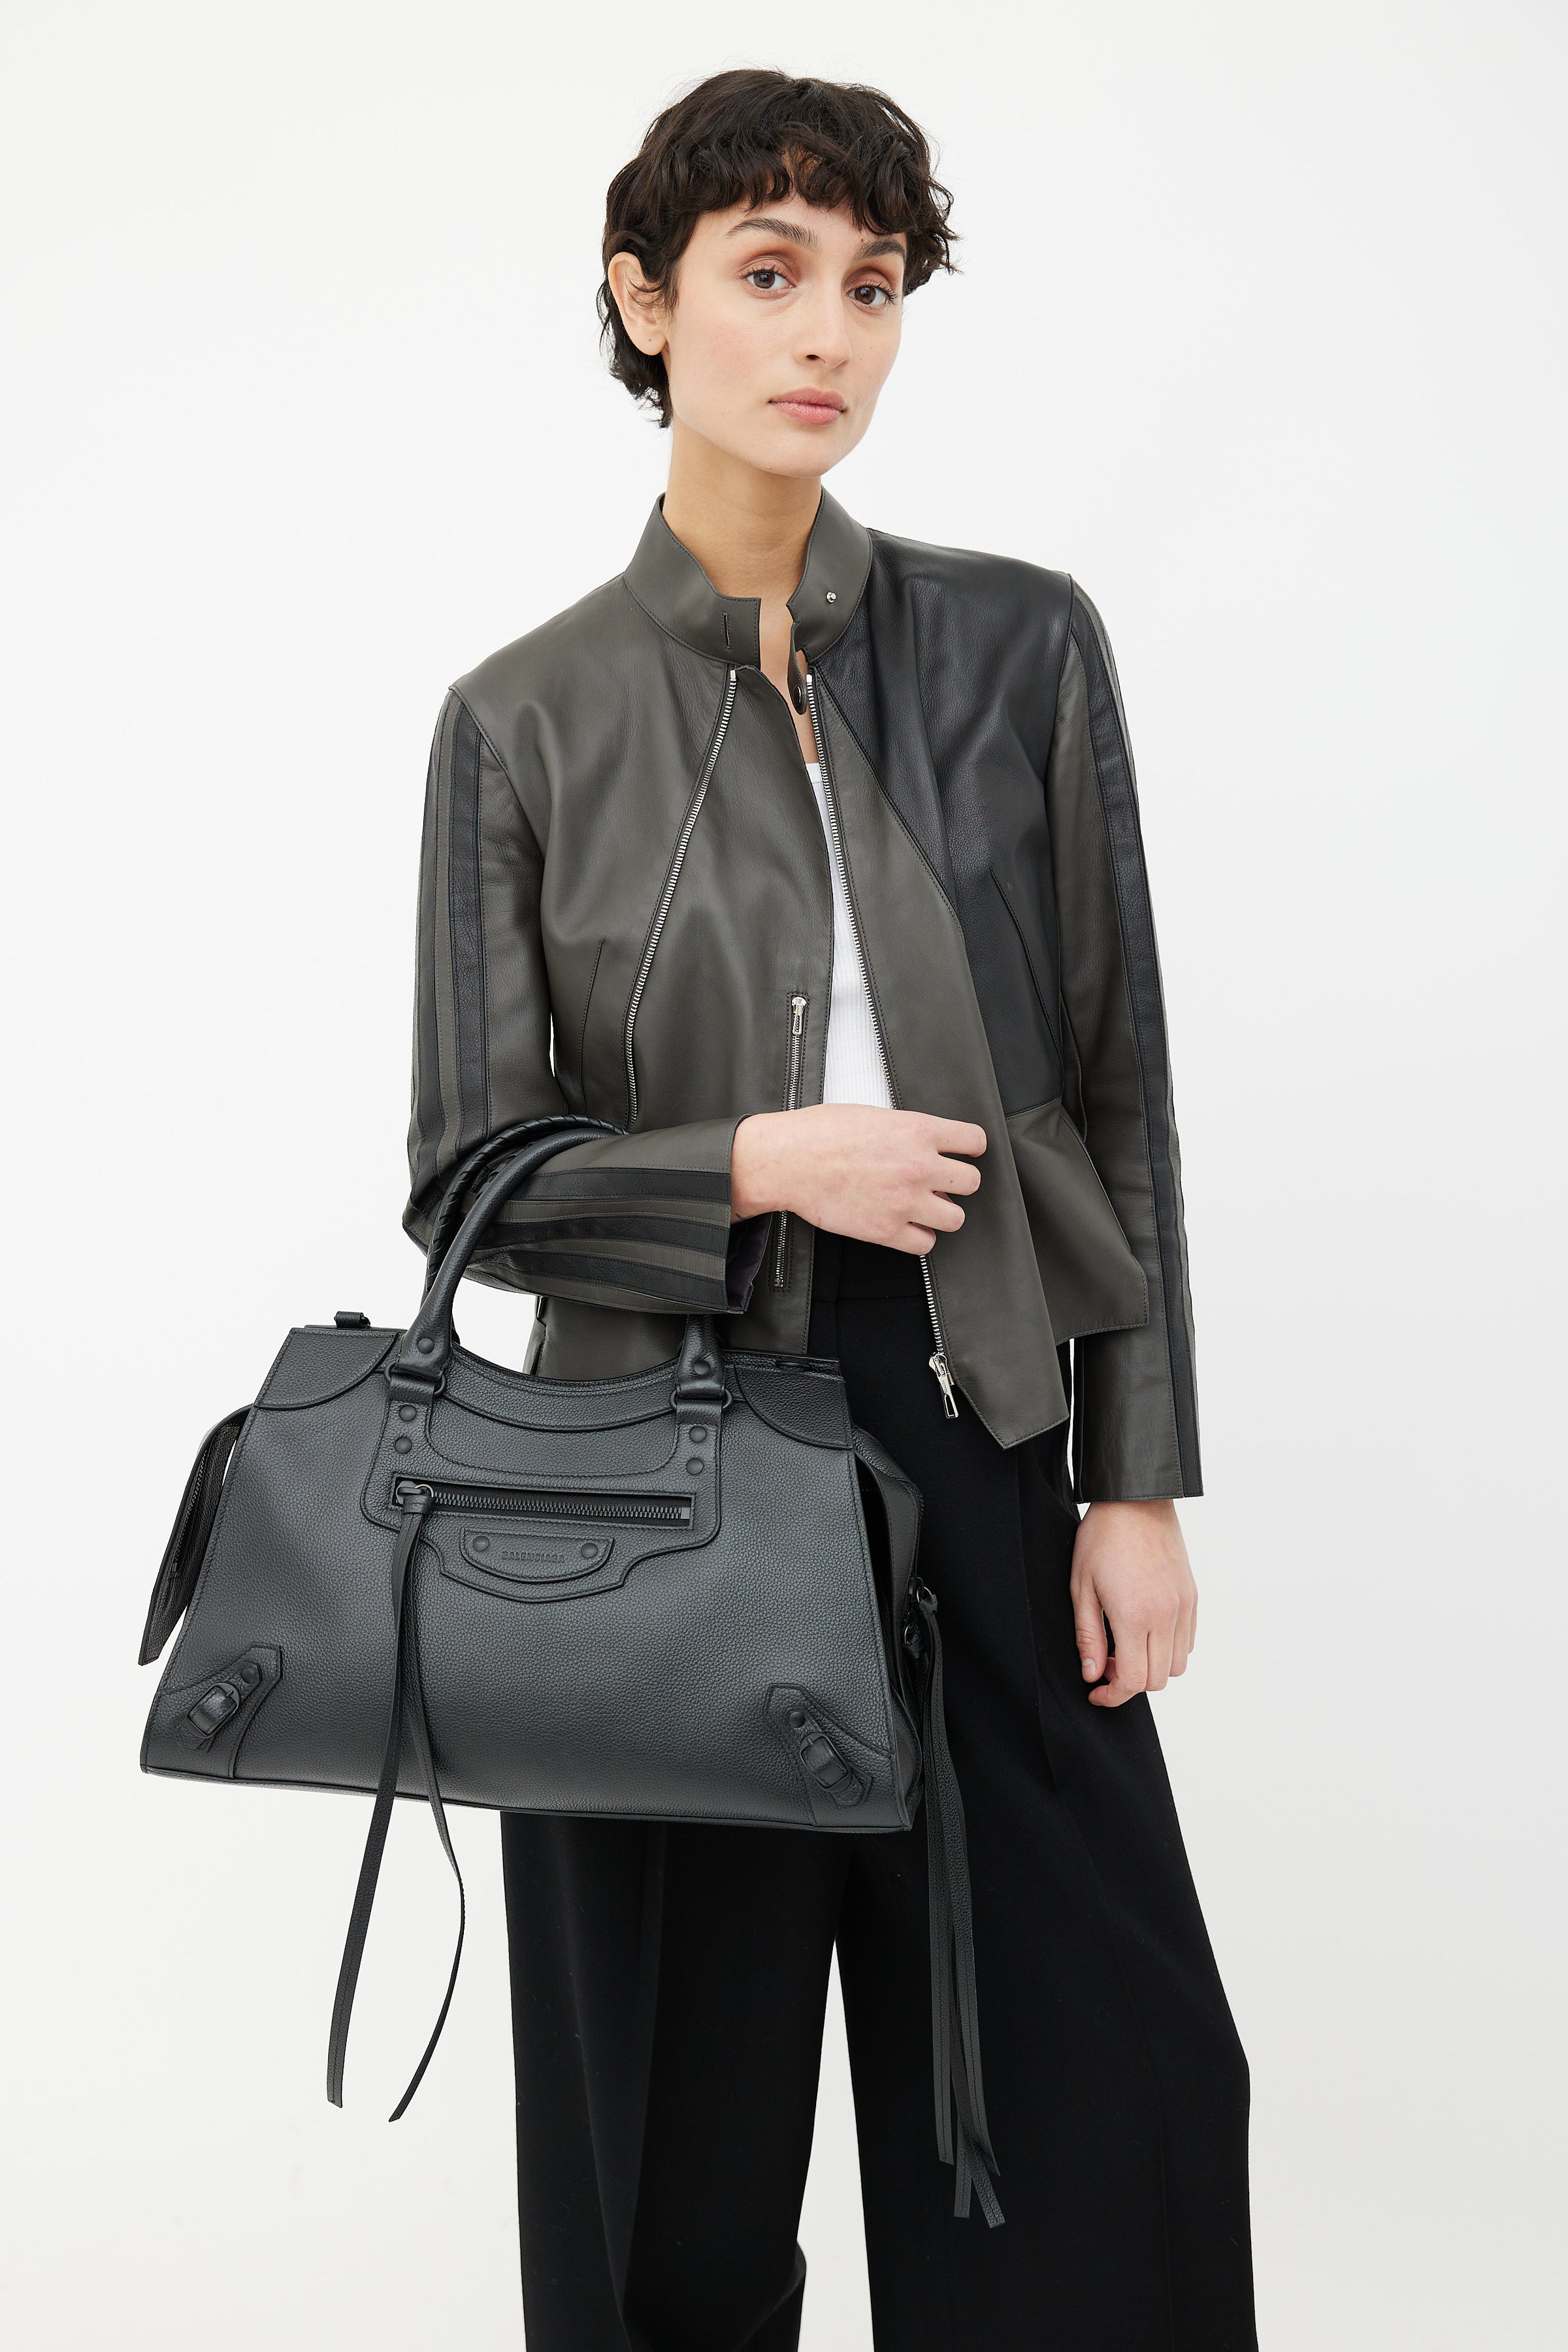 Black Neo Classic City small leather bag, Balenciaga